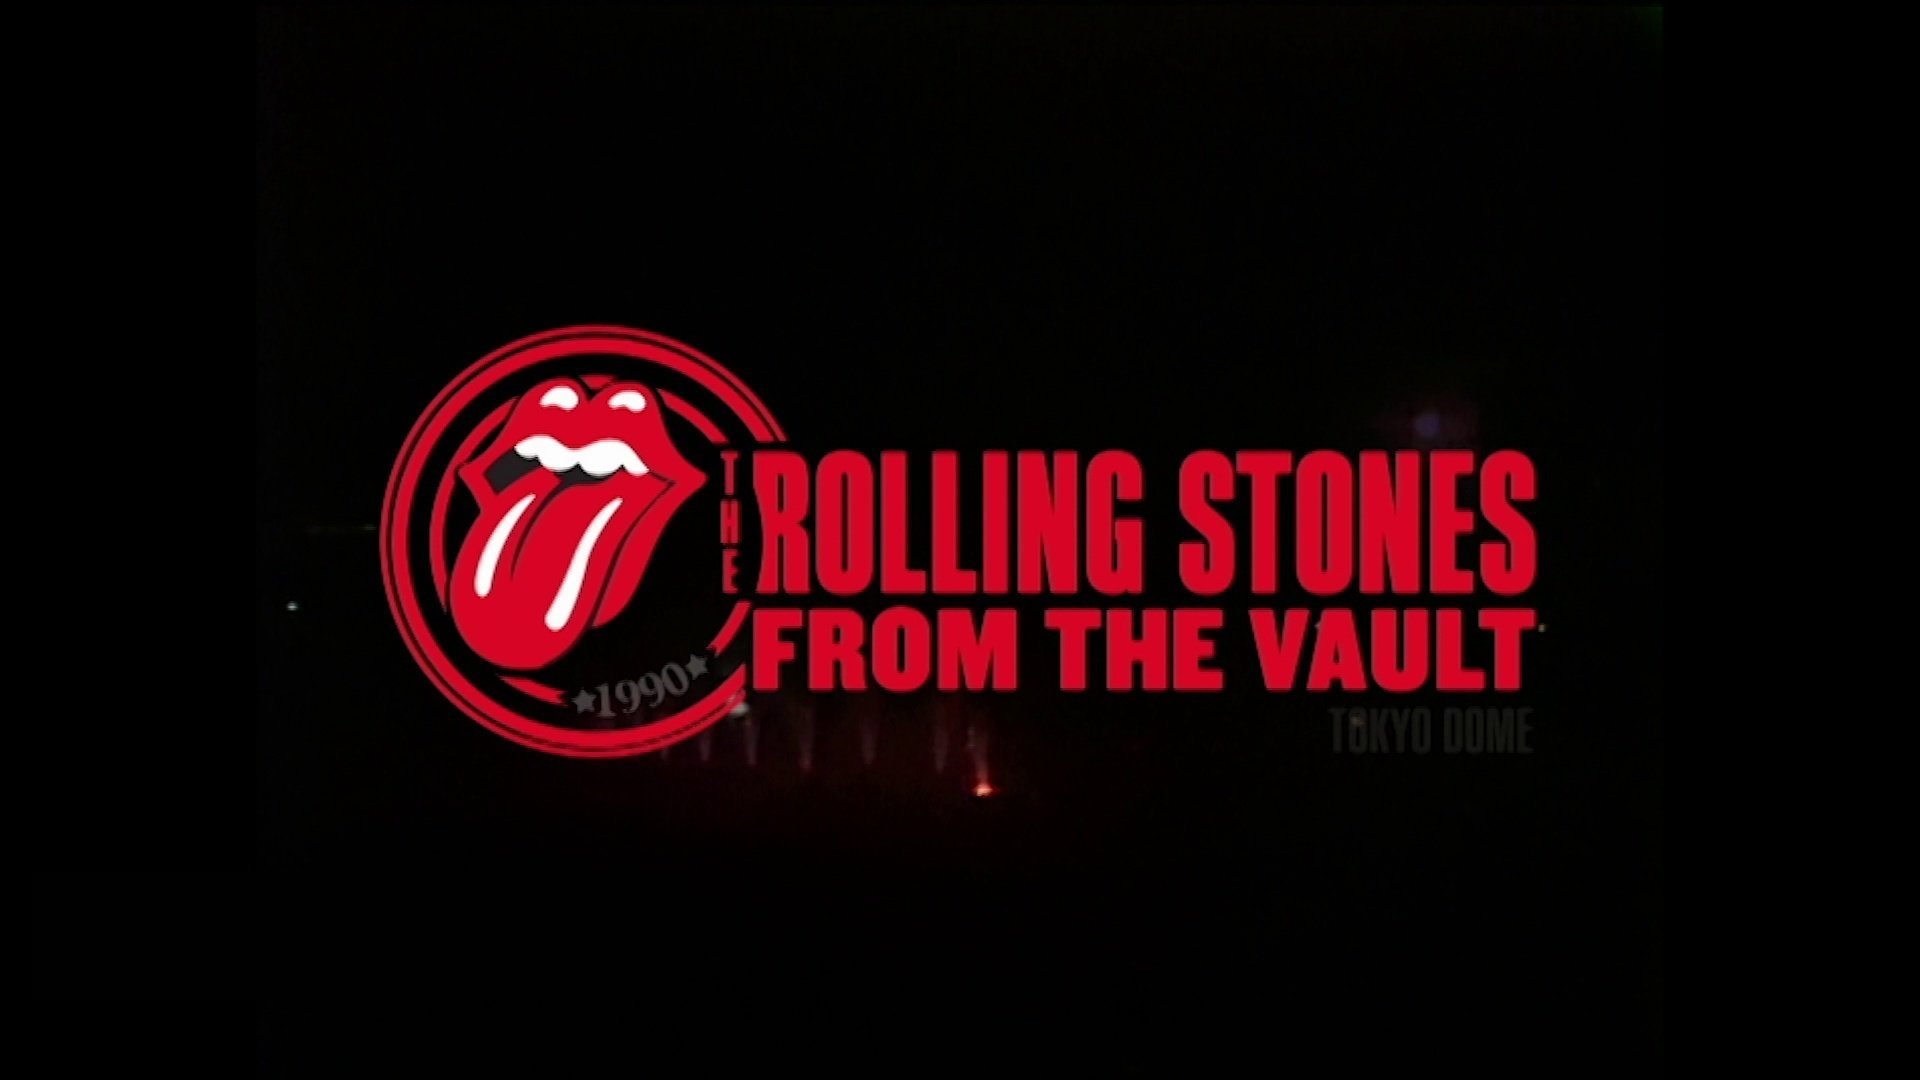 Download HD 1080p The Rolling Stones Desktop Wallpaper Stones Wallpaper HD